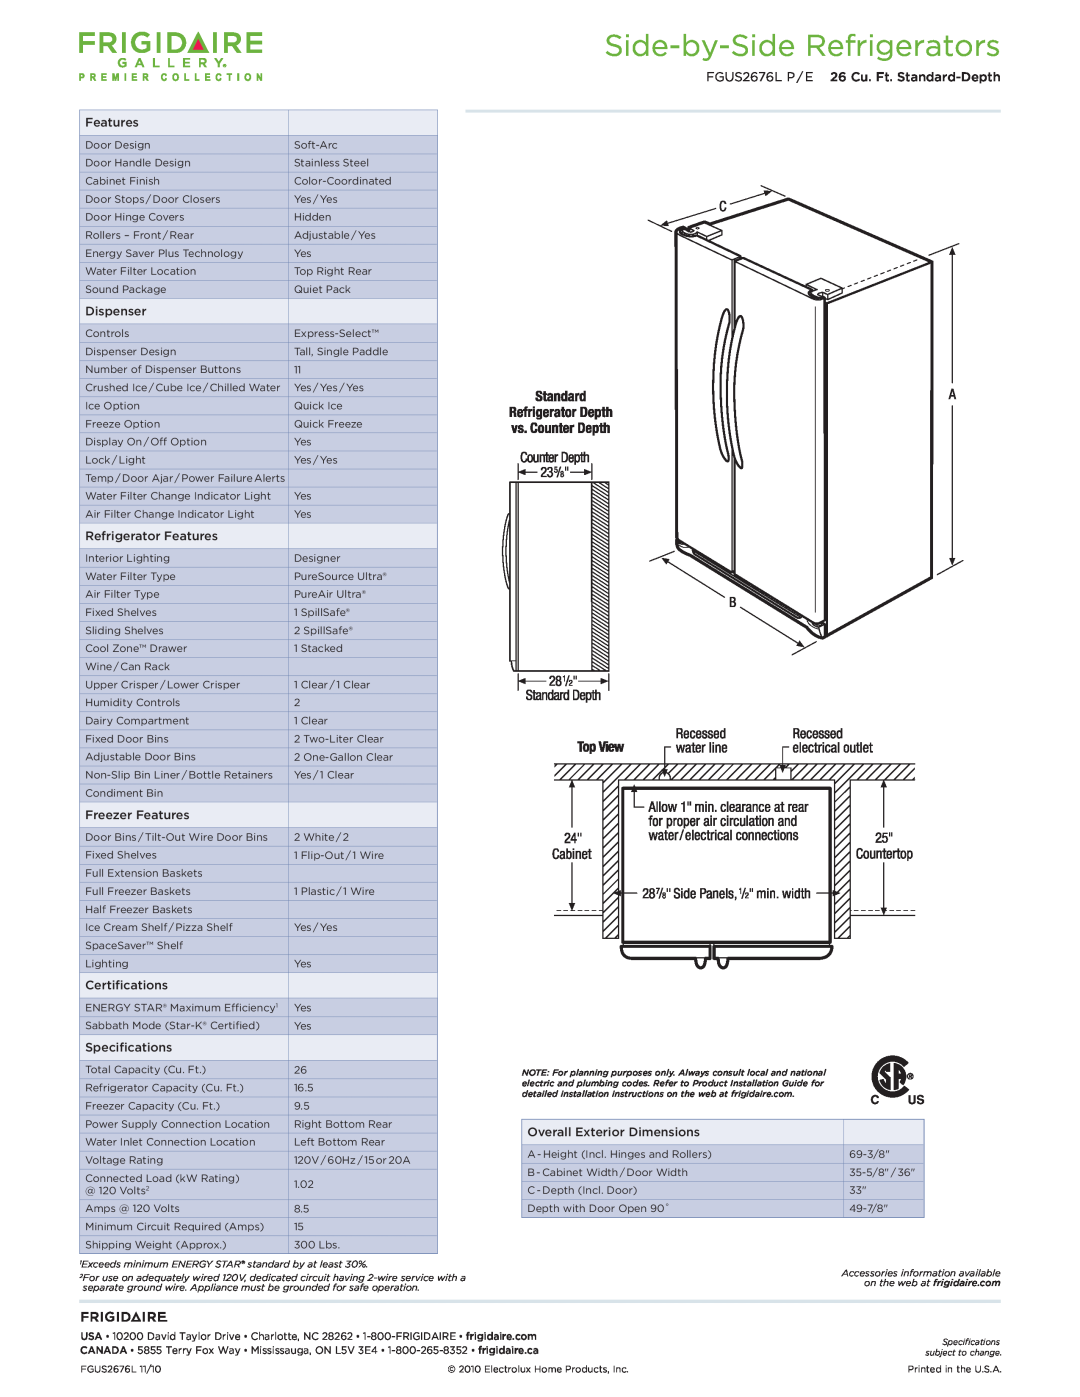 Frigidaire dimensions Side-by-SideRefrigerators, FGUS2676L P / E 26 Cu. Ft. Standard-Depth 